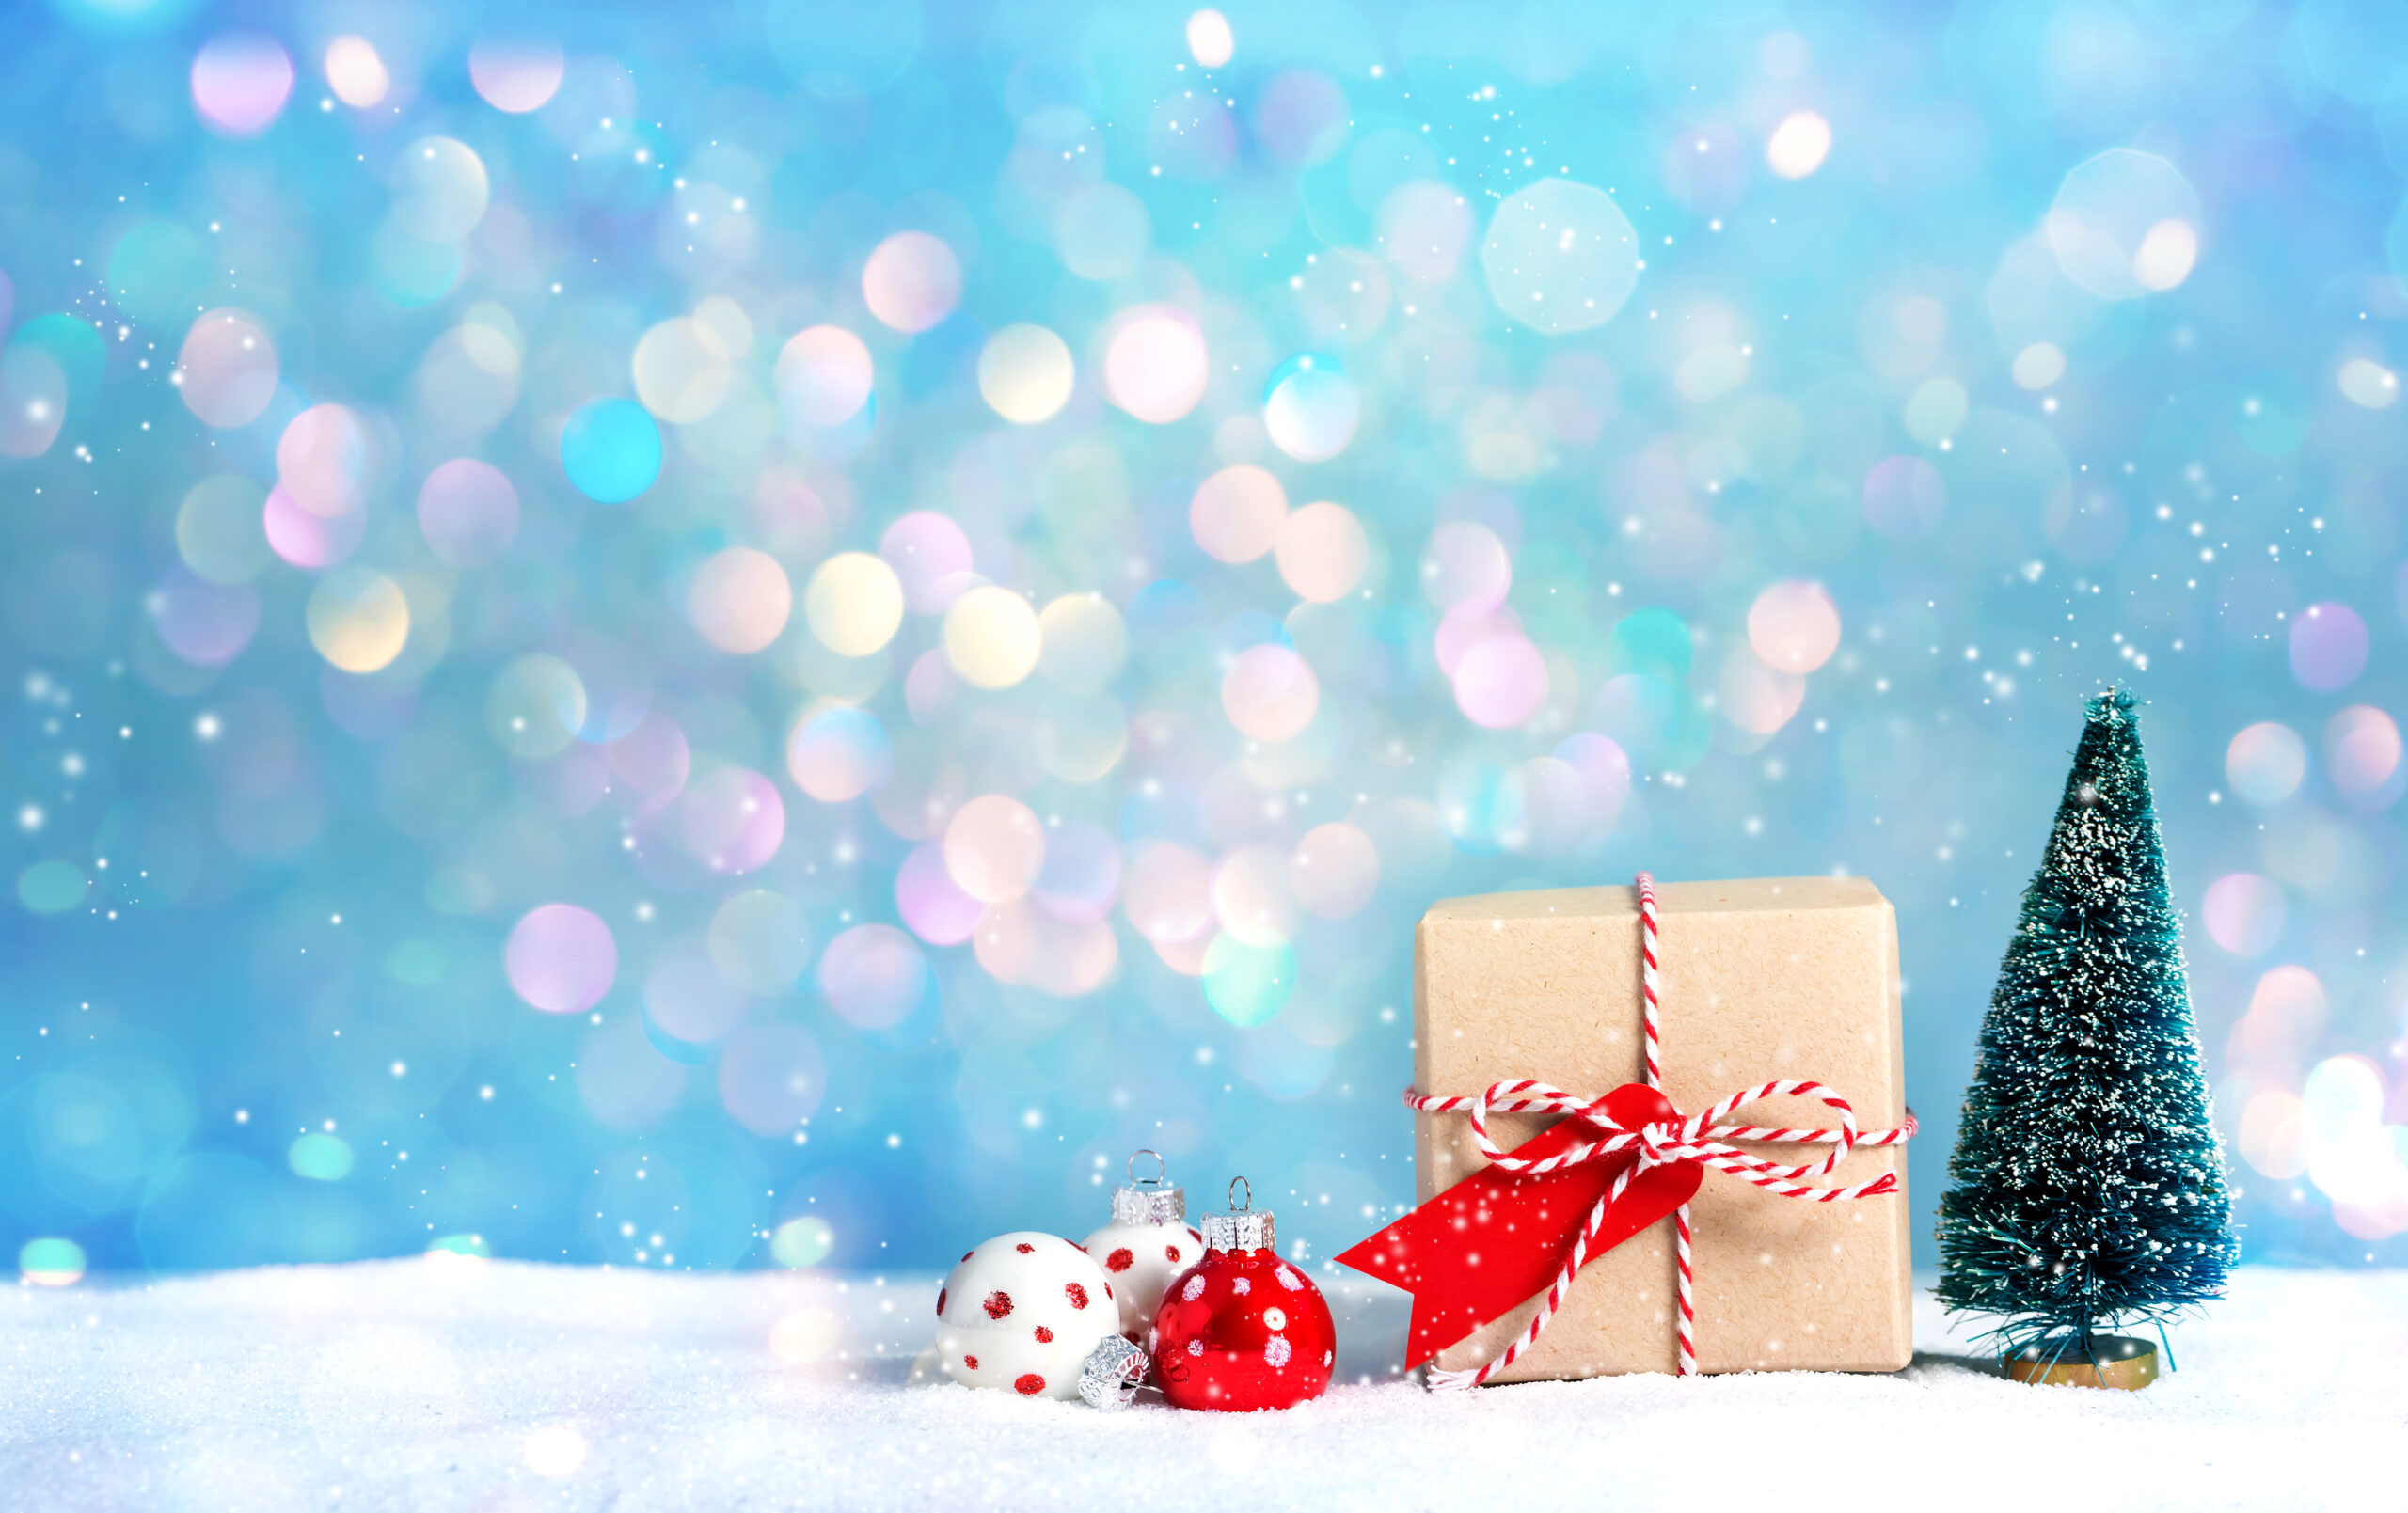 Little,Handmade,Gift,Box,With,Miniature,Christmas,Tree